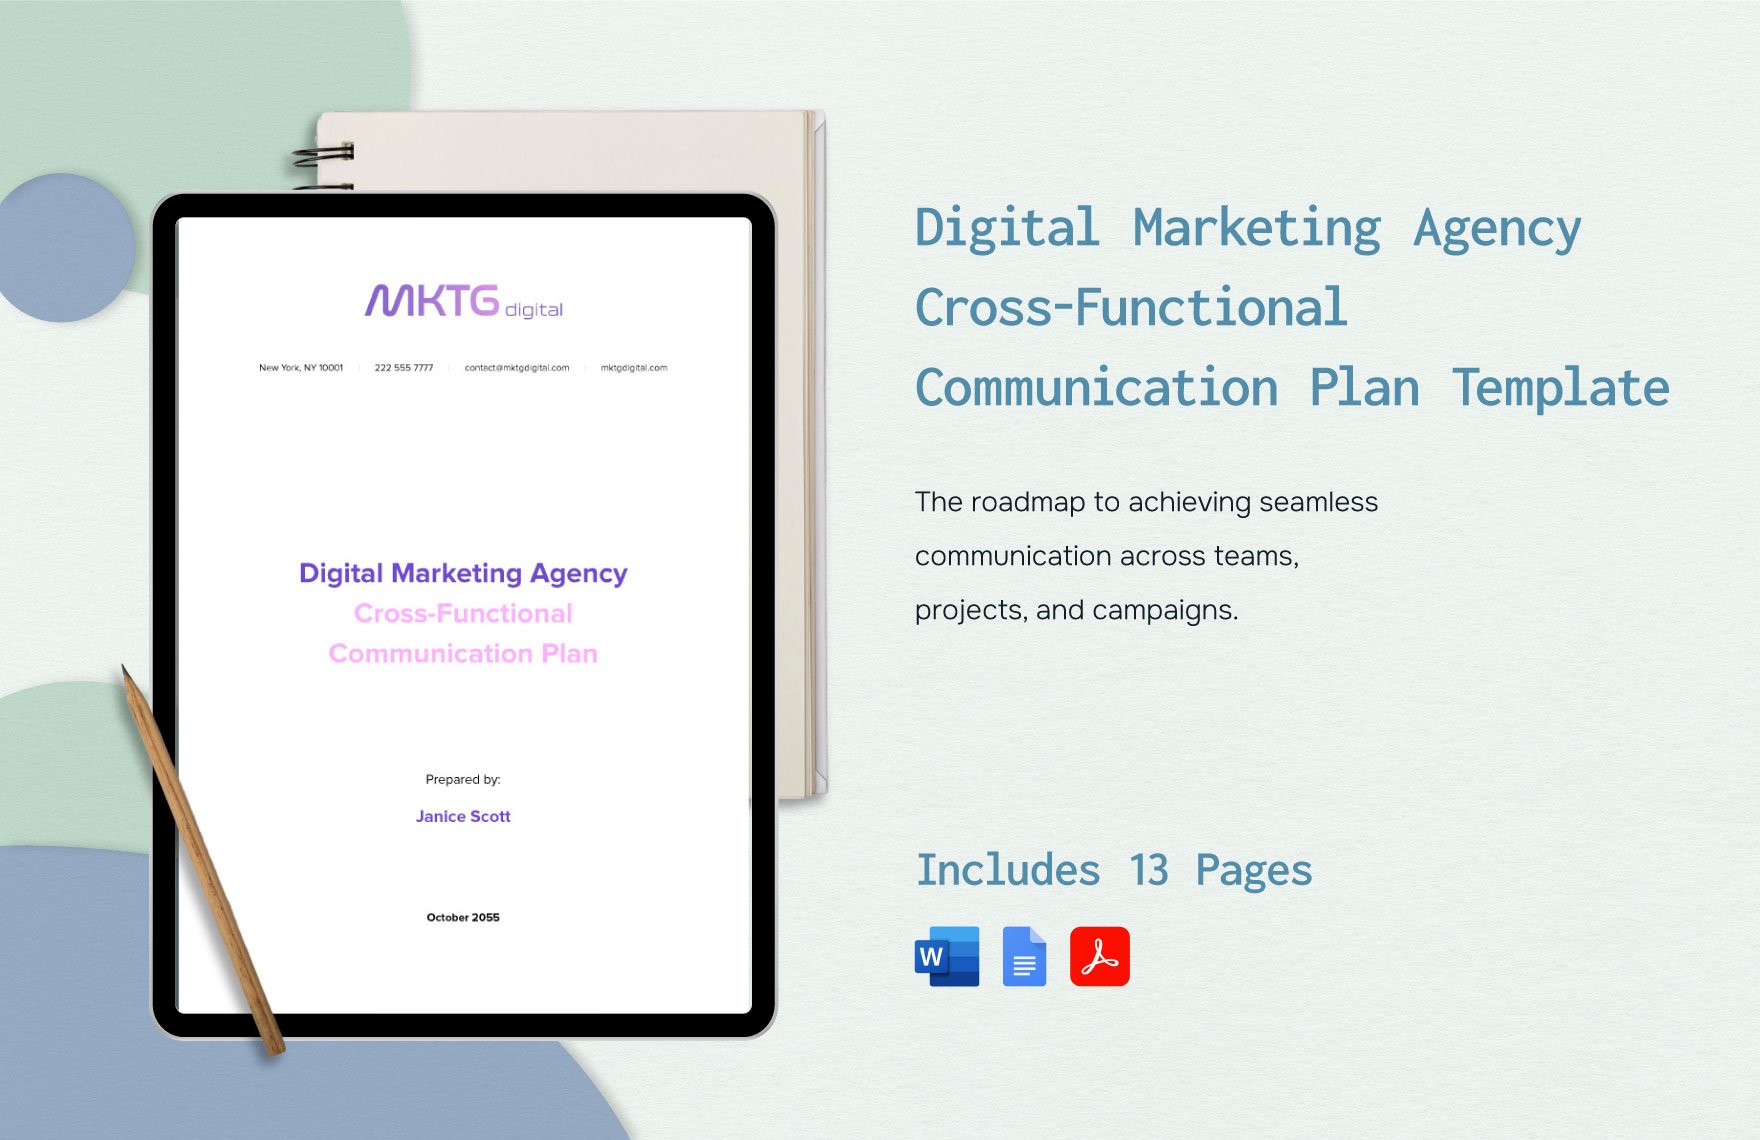 Digital Marketing Agency Cross-Functional Communication Plan Template